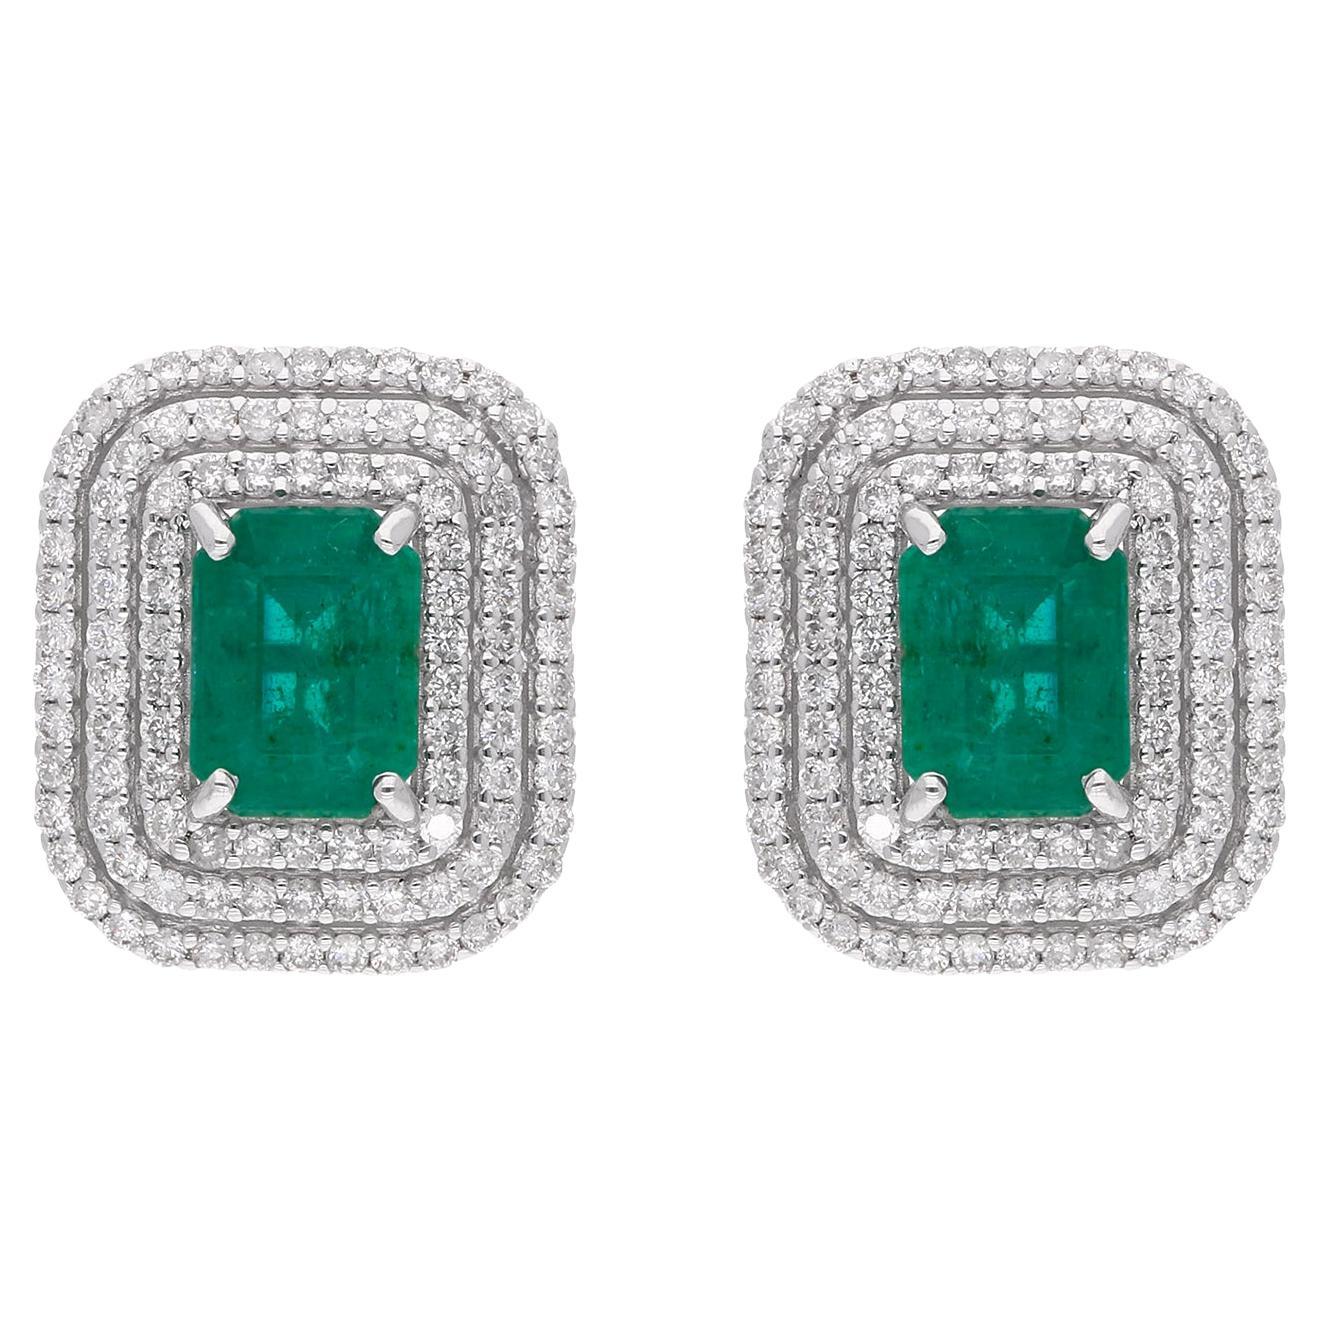 Zambian Emerald Gemstone Stud Earrings Pave Diamond 18 Karat White Gold Jewelry For Sale